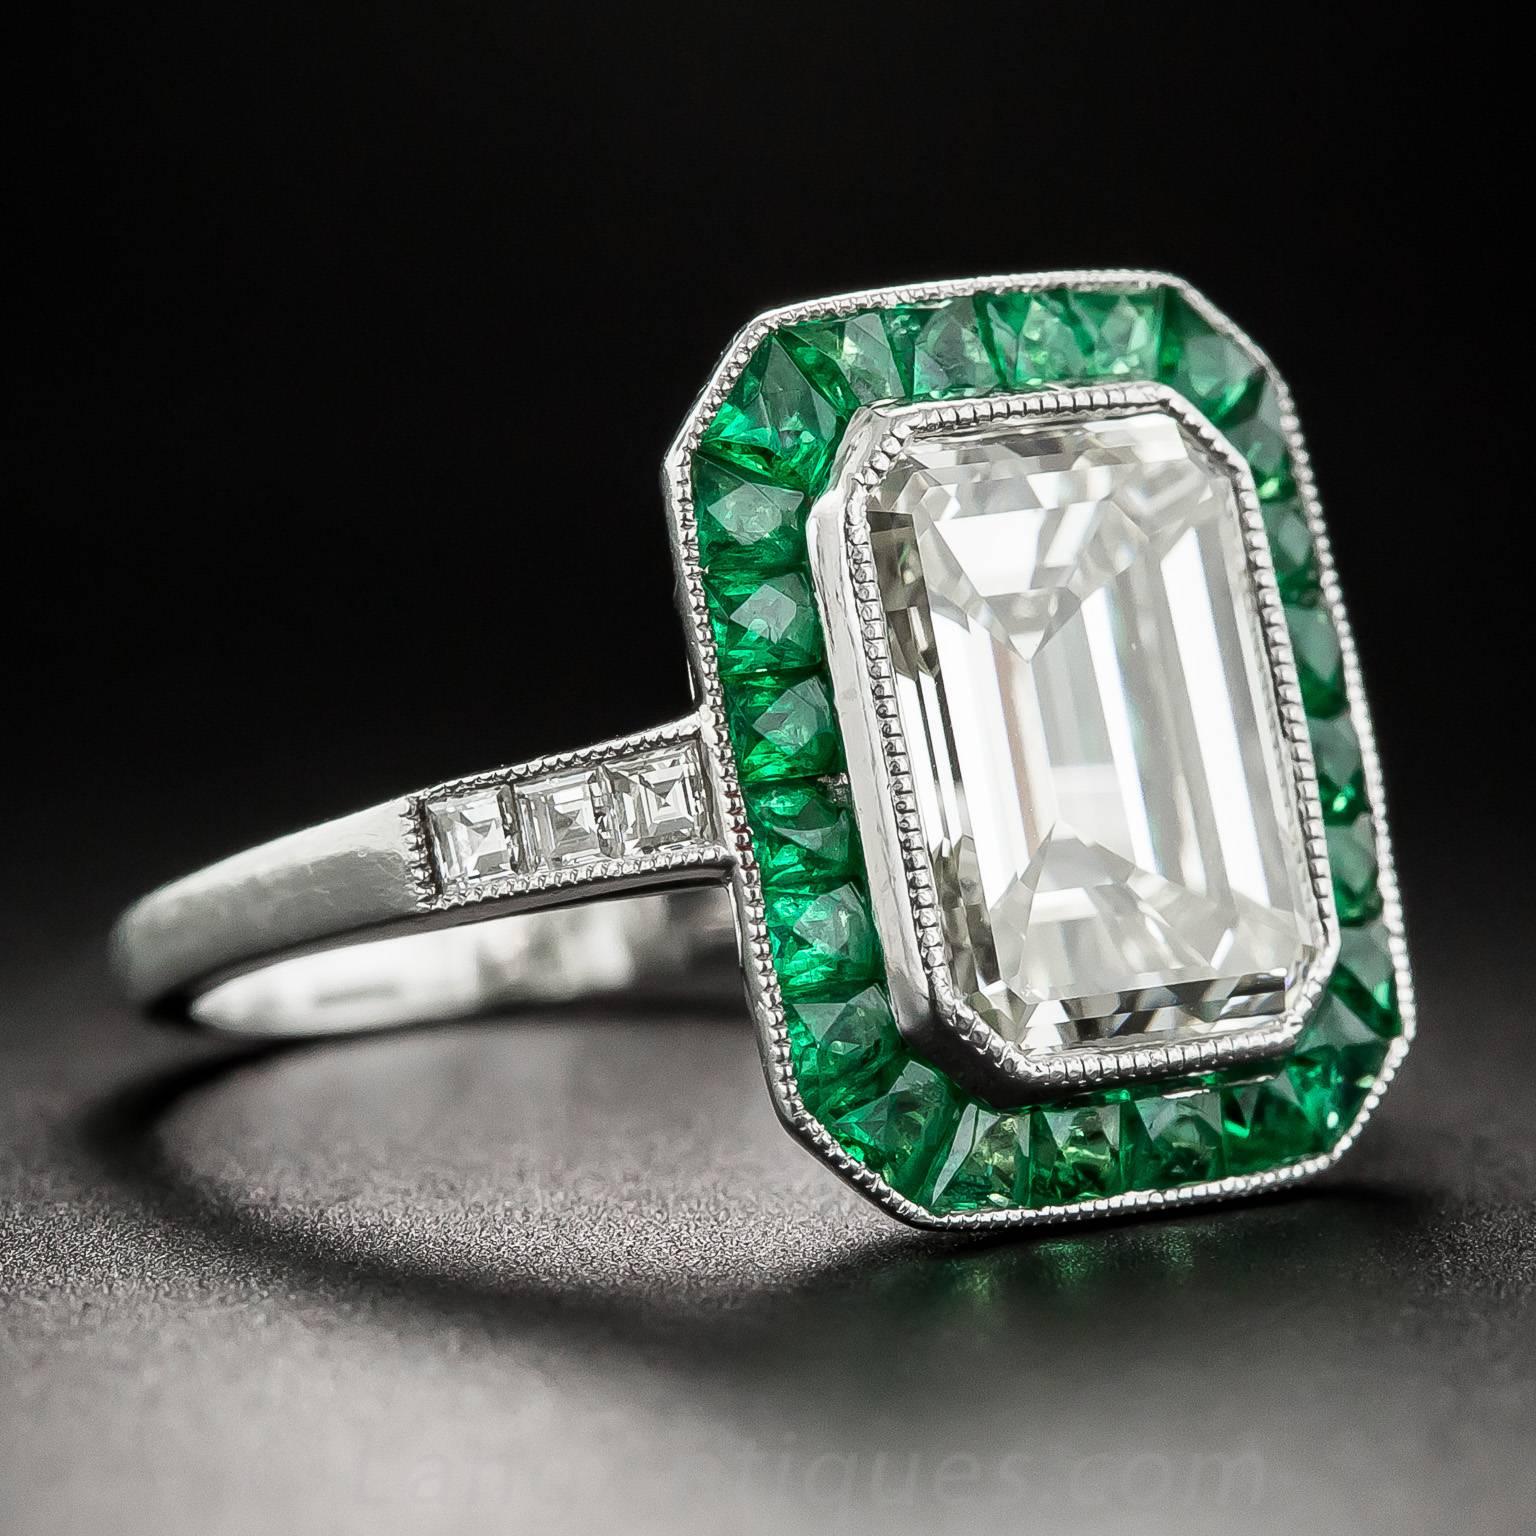 3 carat emerald cut diamond ring for sale